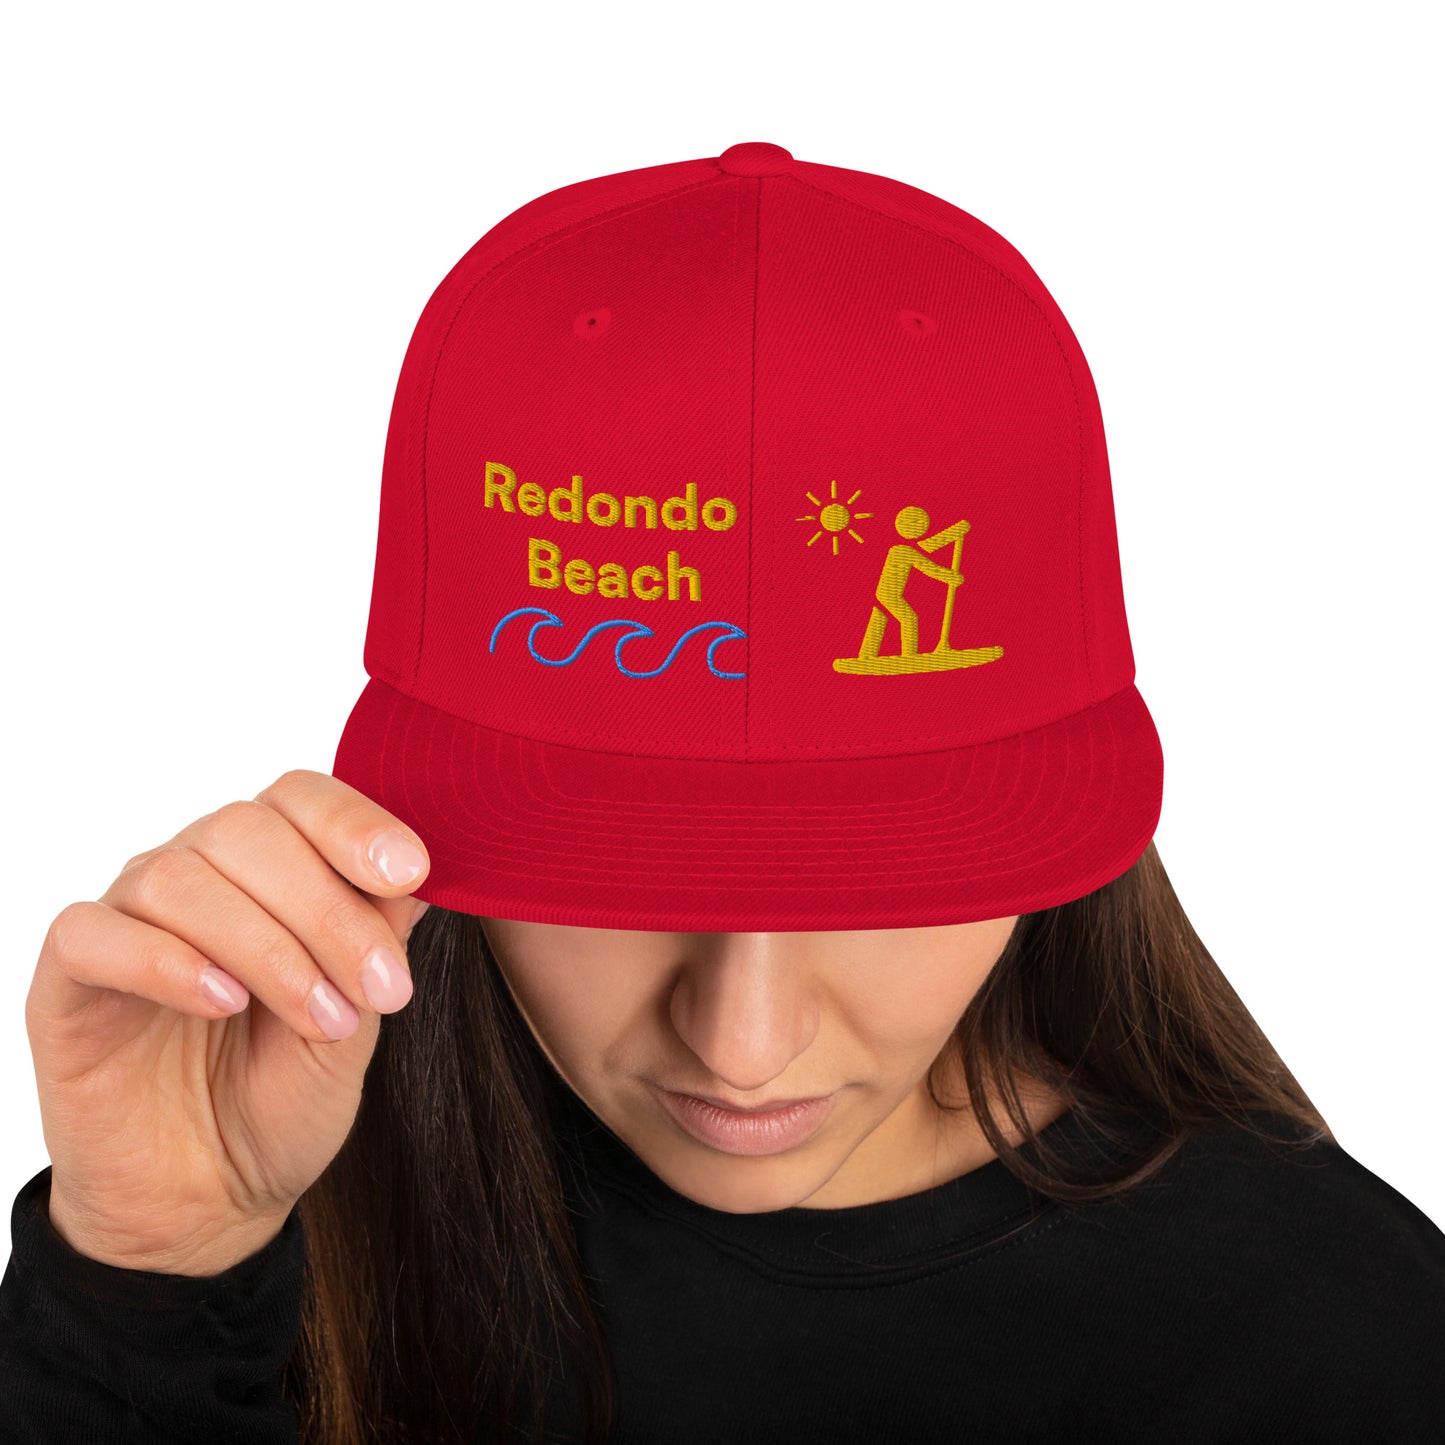 Redondo Beach - California - South Bay - Snapback Hat - SUP Style   (2 Sided Print)